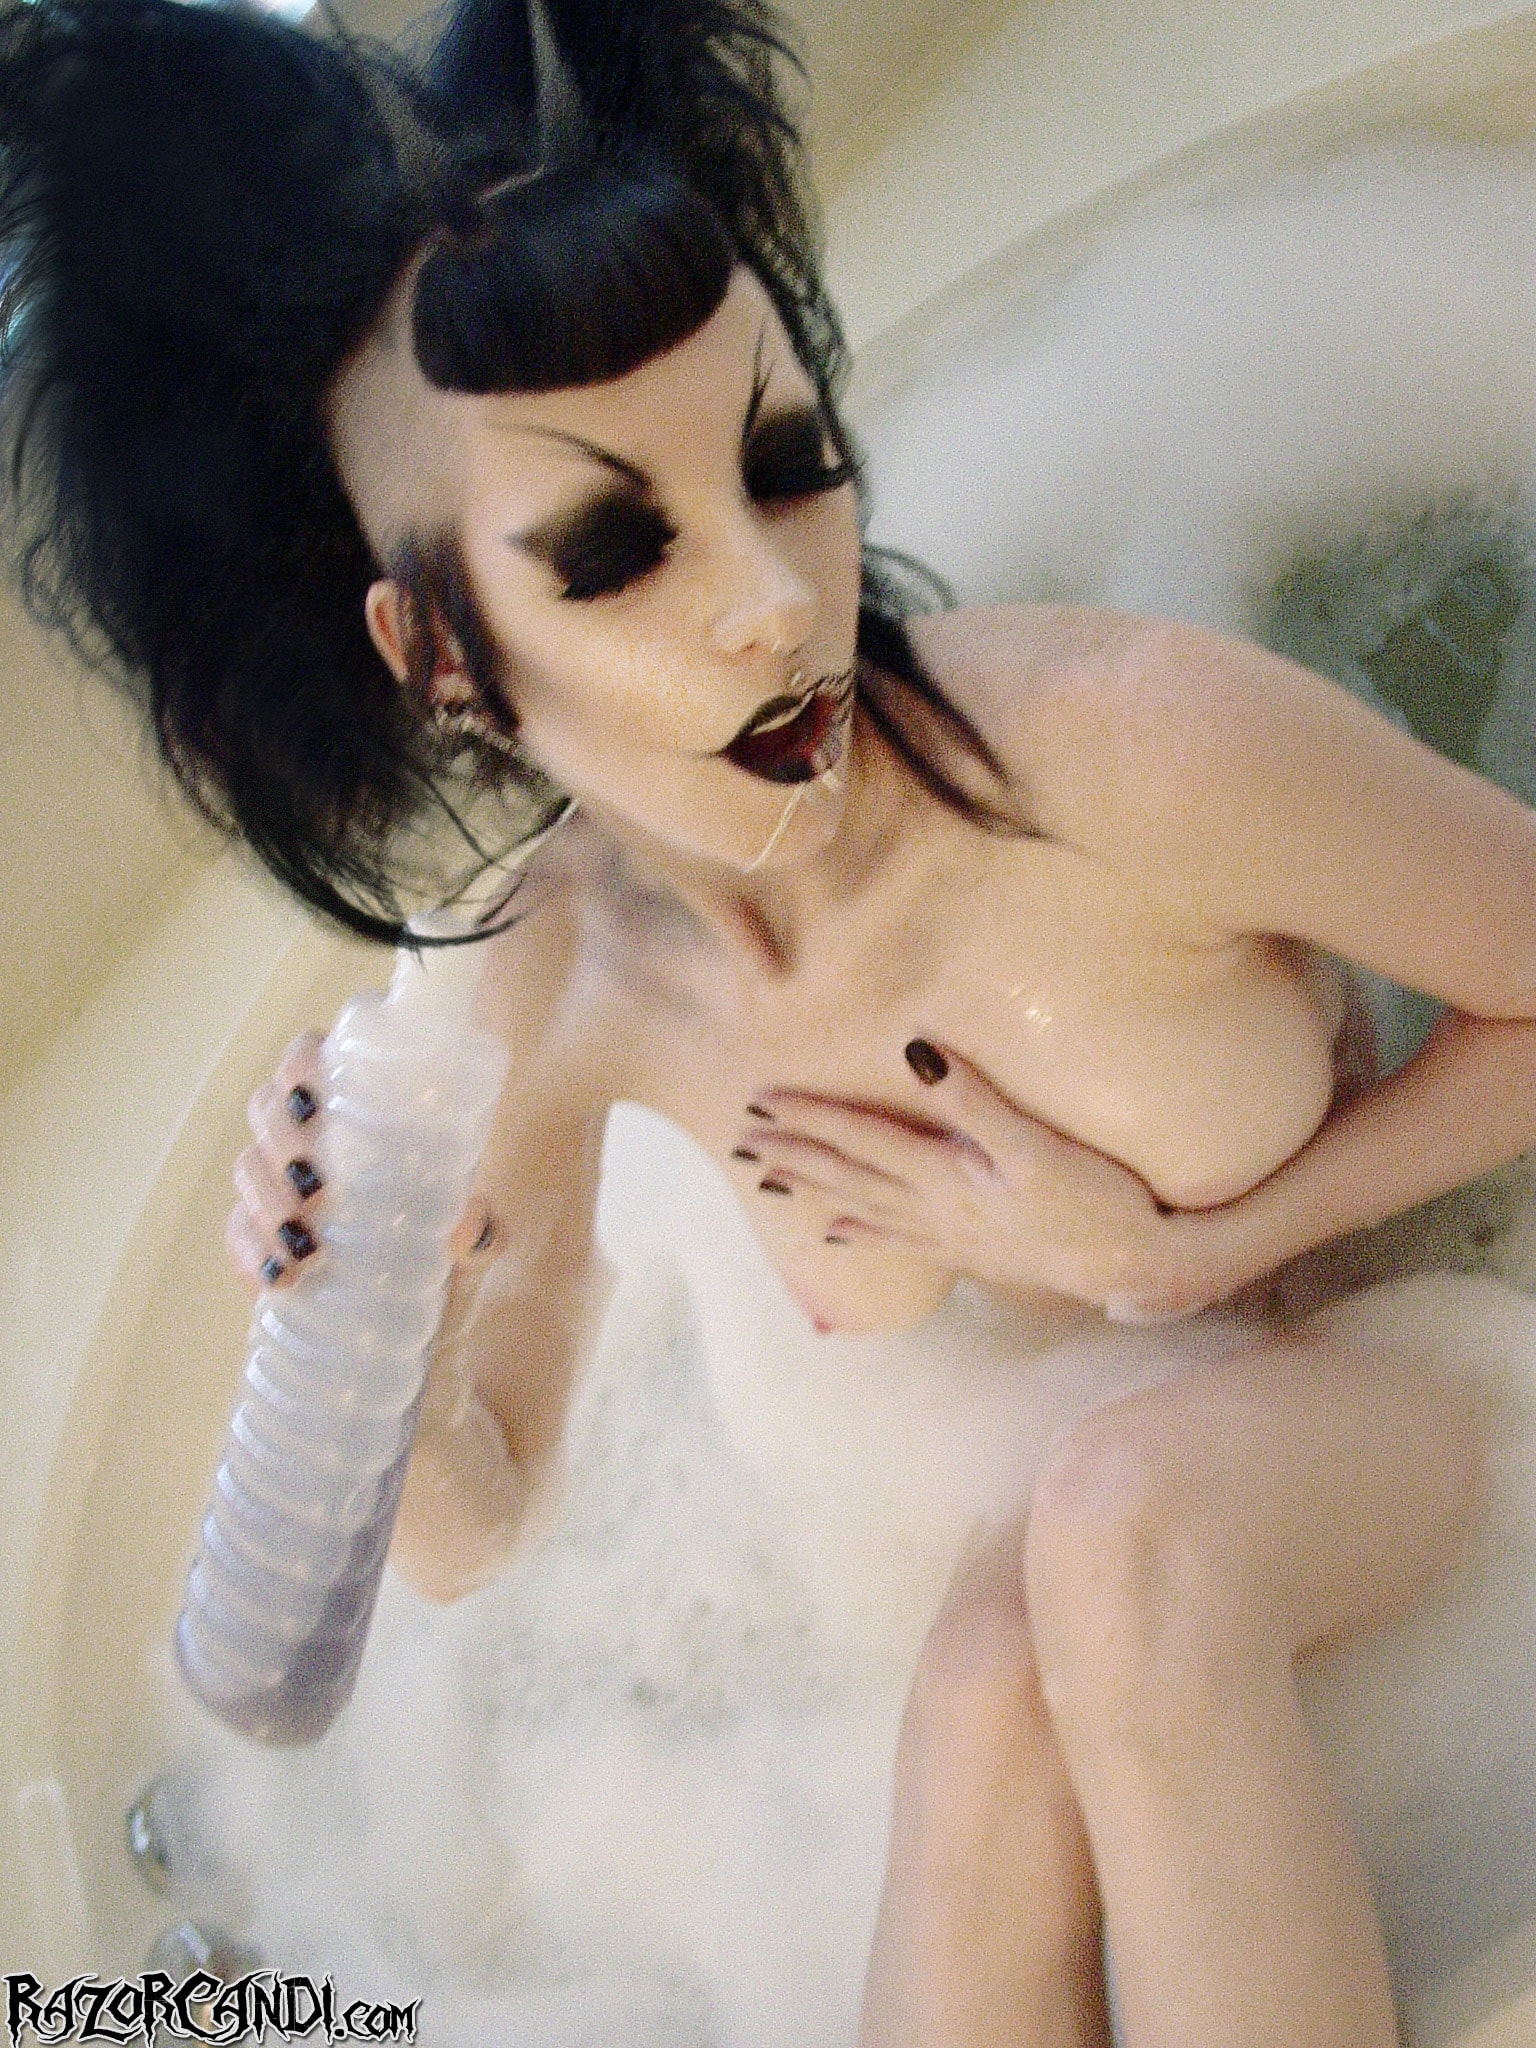 Razor Candi 'Classic Gothic Deathrock Beauty in Bubble Bath' starring Razor Candi (Photo 8)